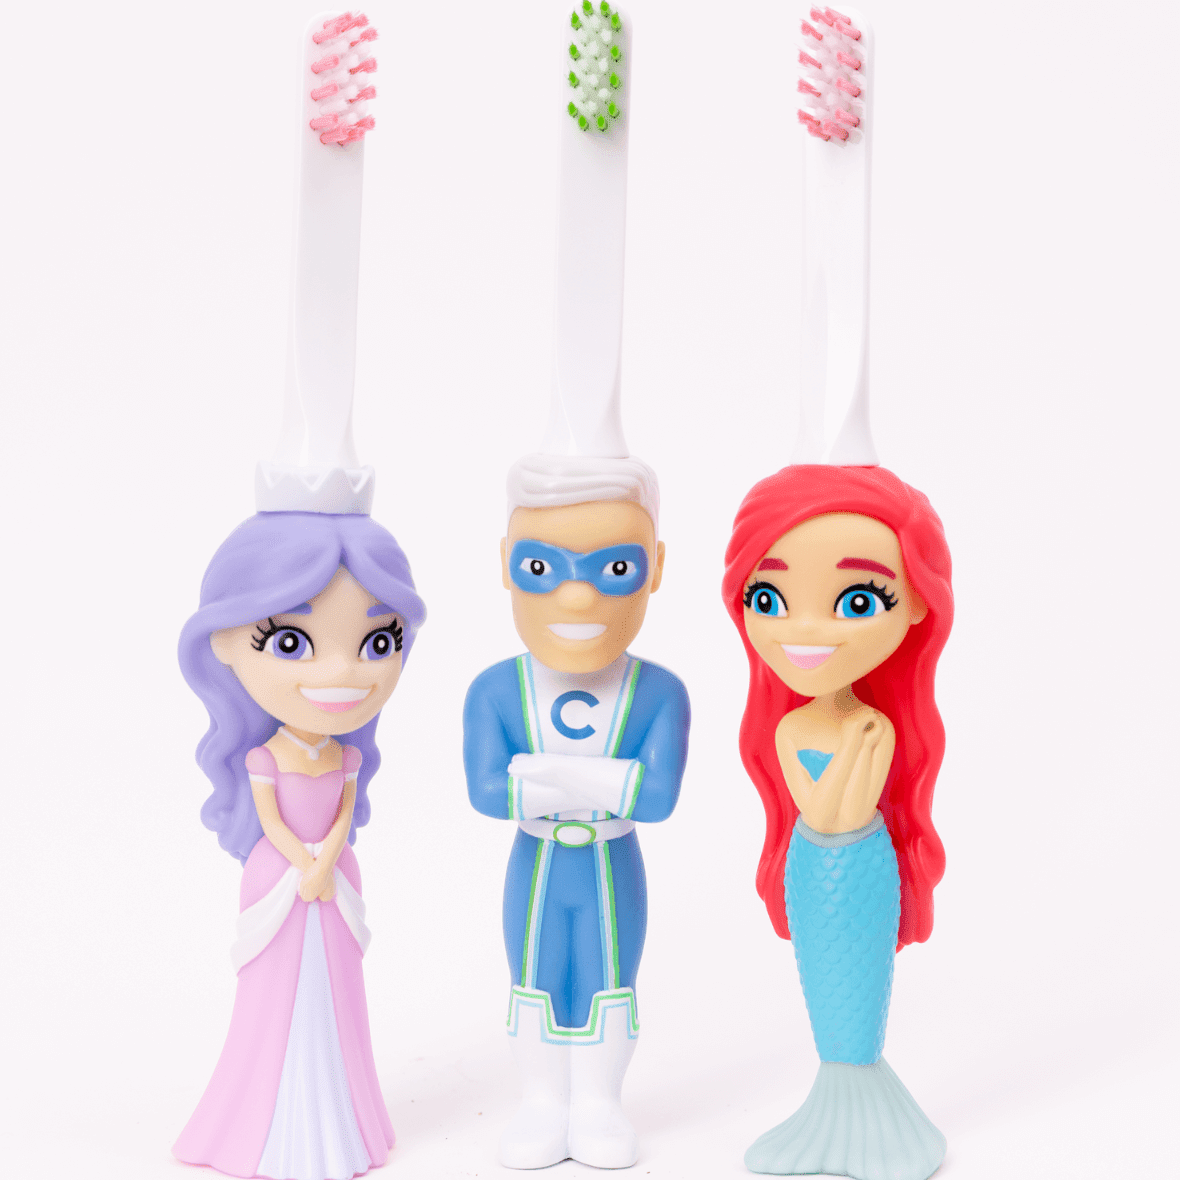 Aqua the Mermaid  Mermaid Toothbrush Toy – Toothbrush Toys